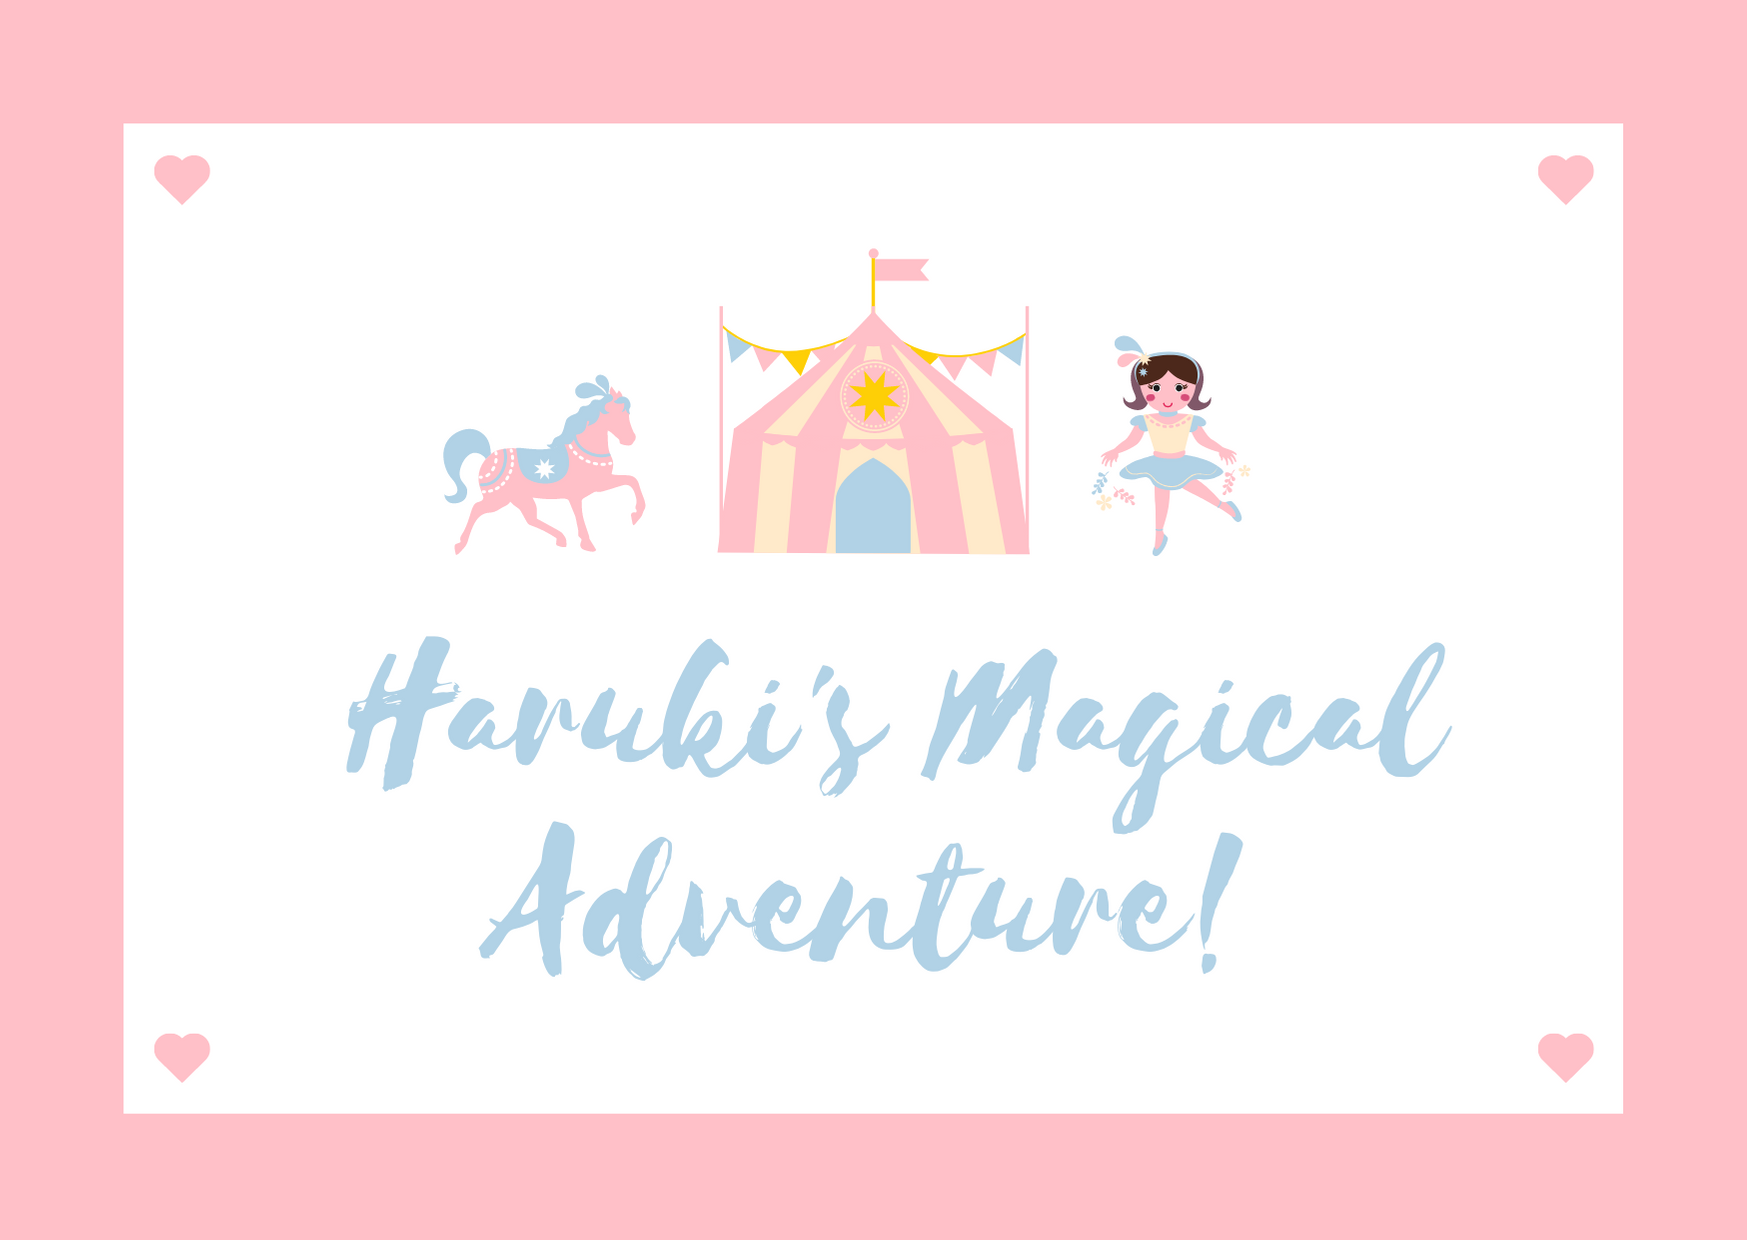 haruki's magical adventure !